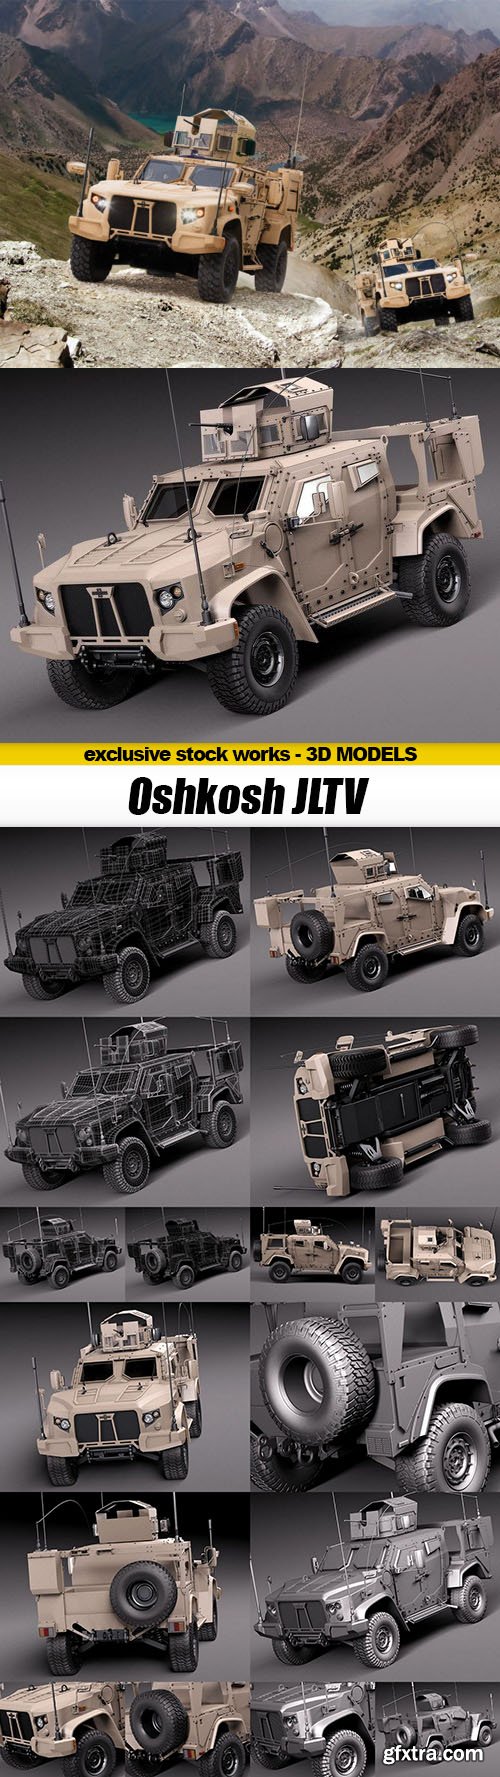 CGTrader 3D MODELS - Oshkosh JLTV